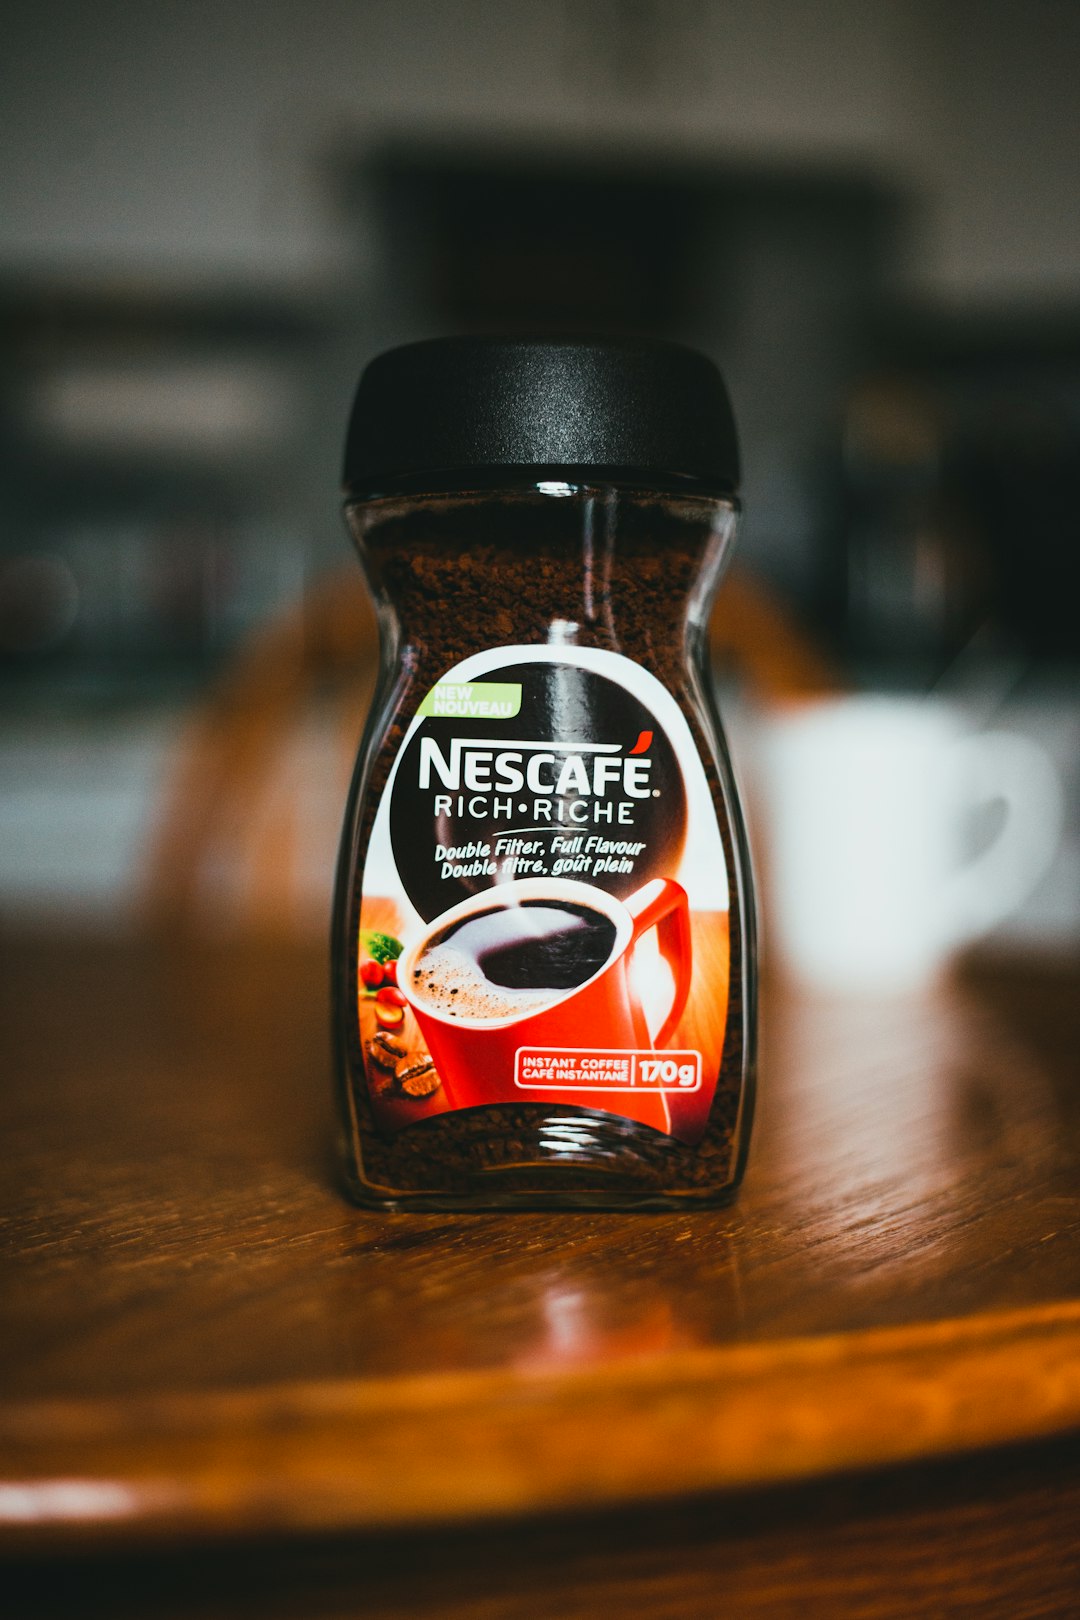 nescafe original coffee bottle on brown wooden table